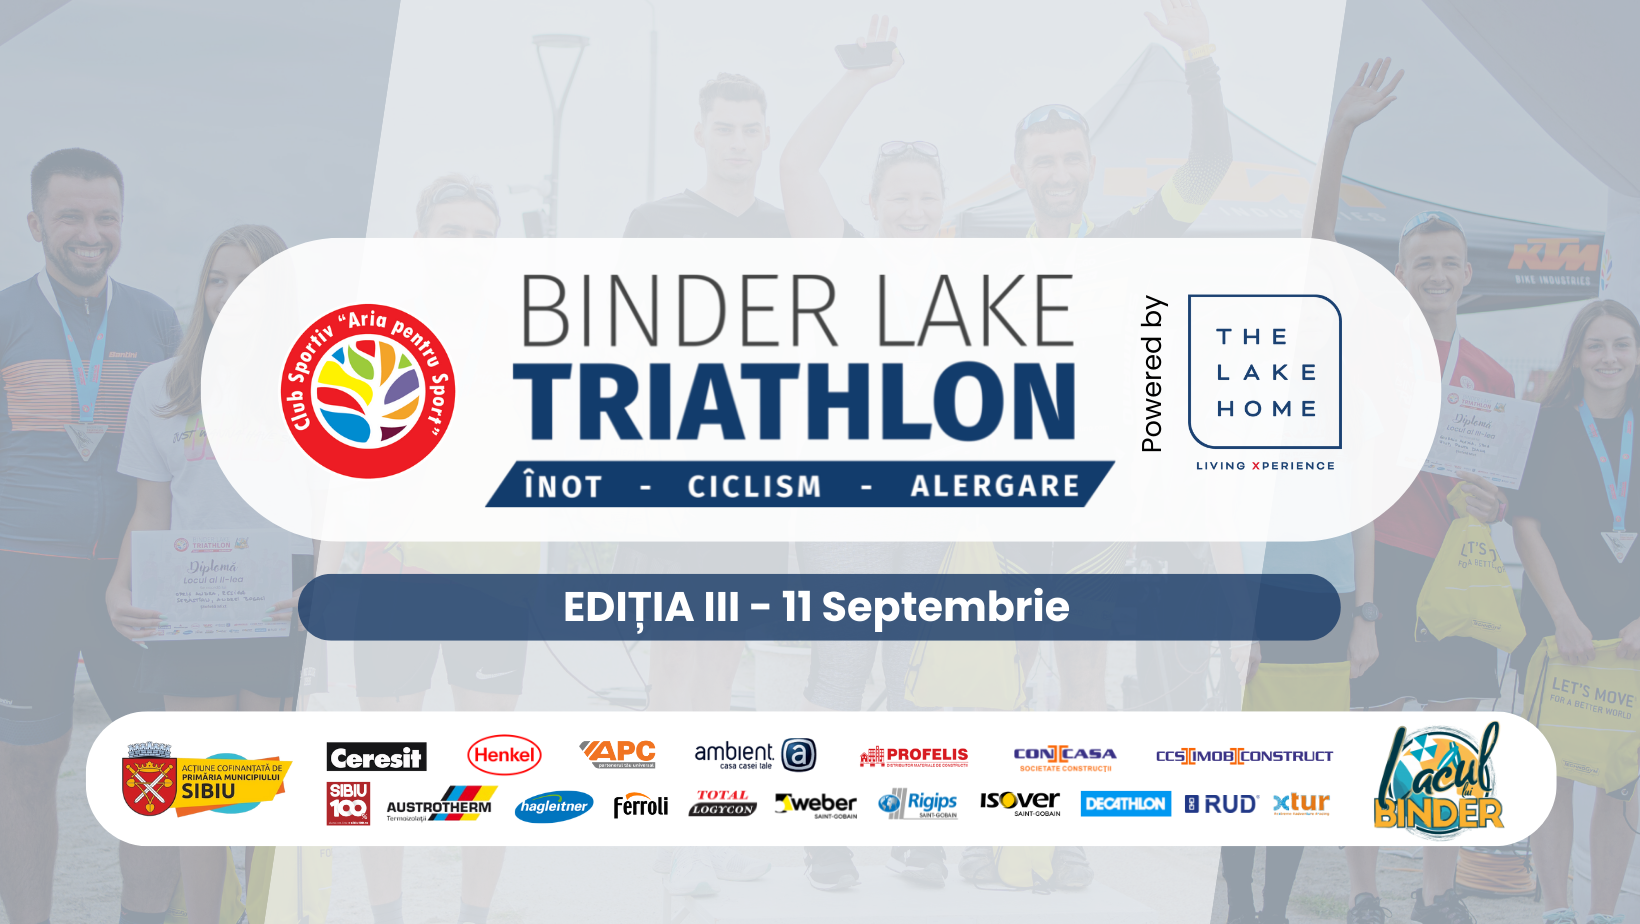 Binder Lake Triathlon 2022 (Ediția III)